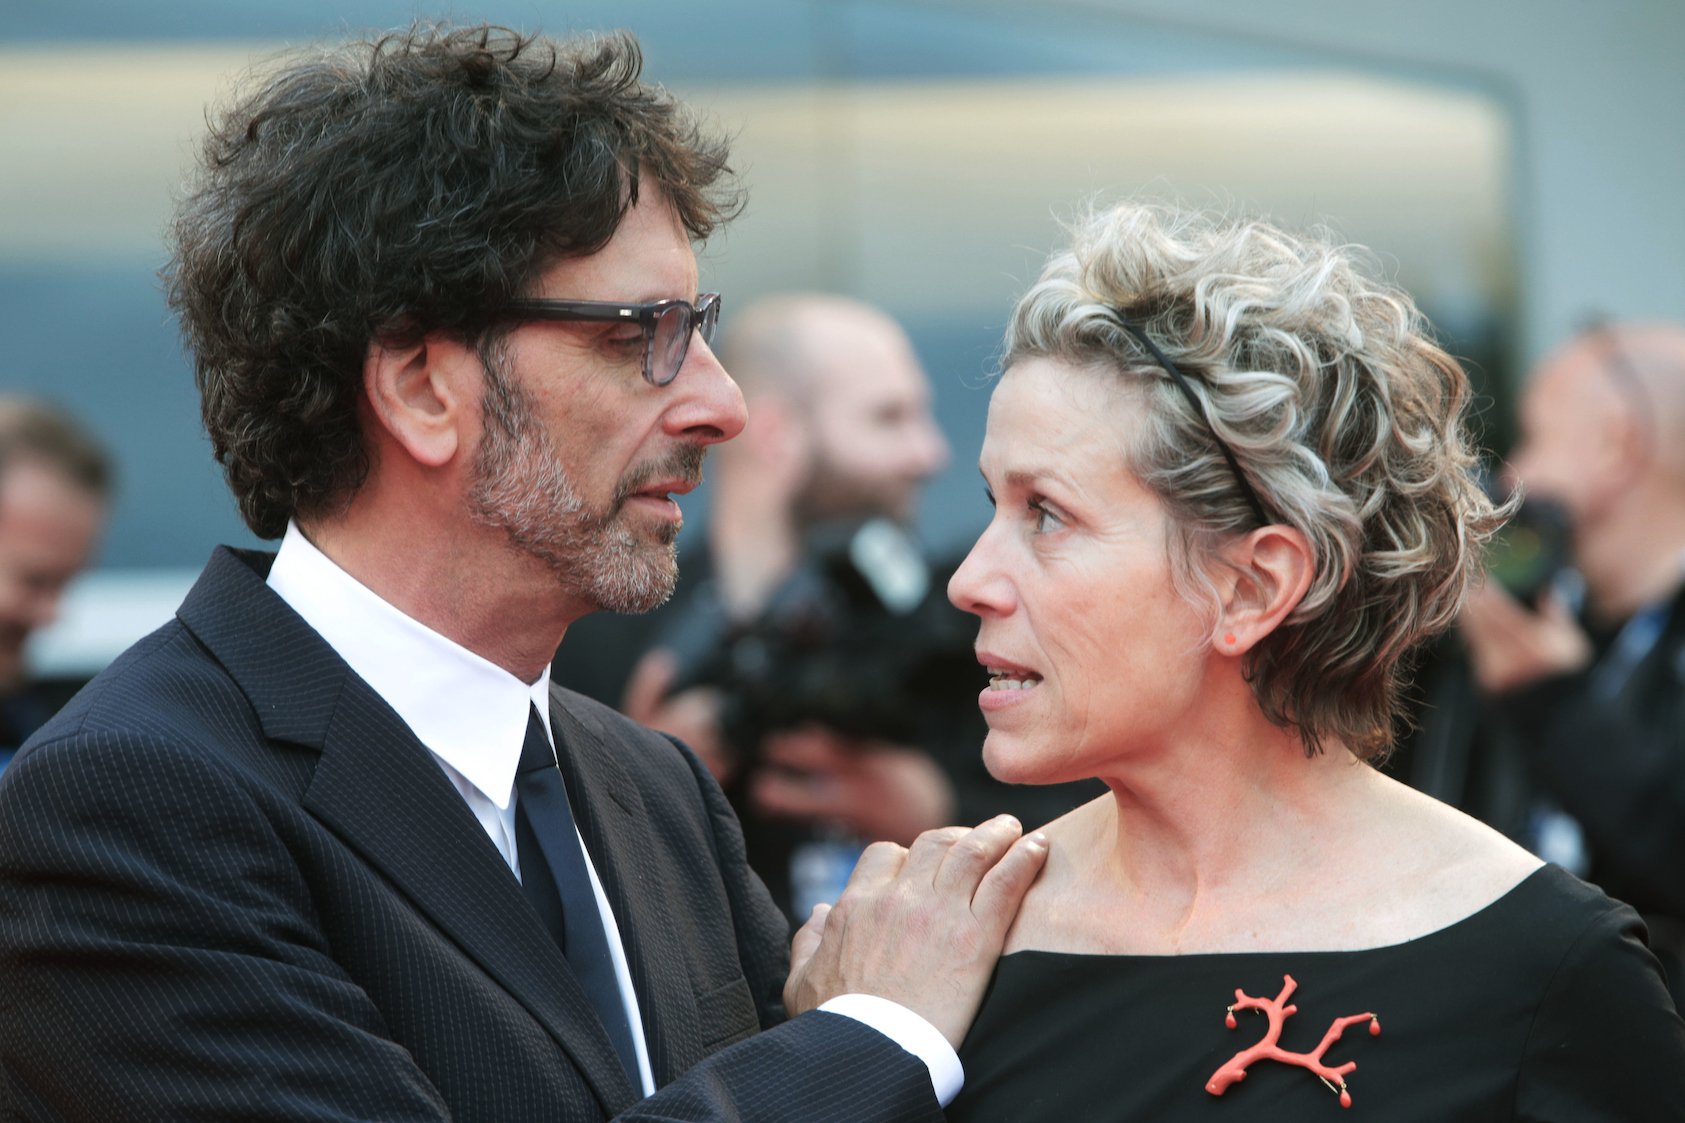 Frances McDormand looking at her husband, Joel Coen, at a movie premiere